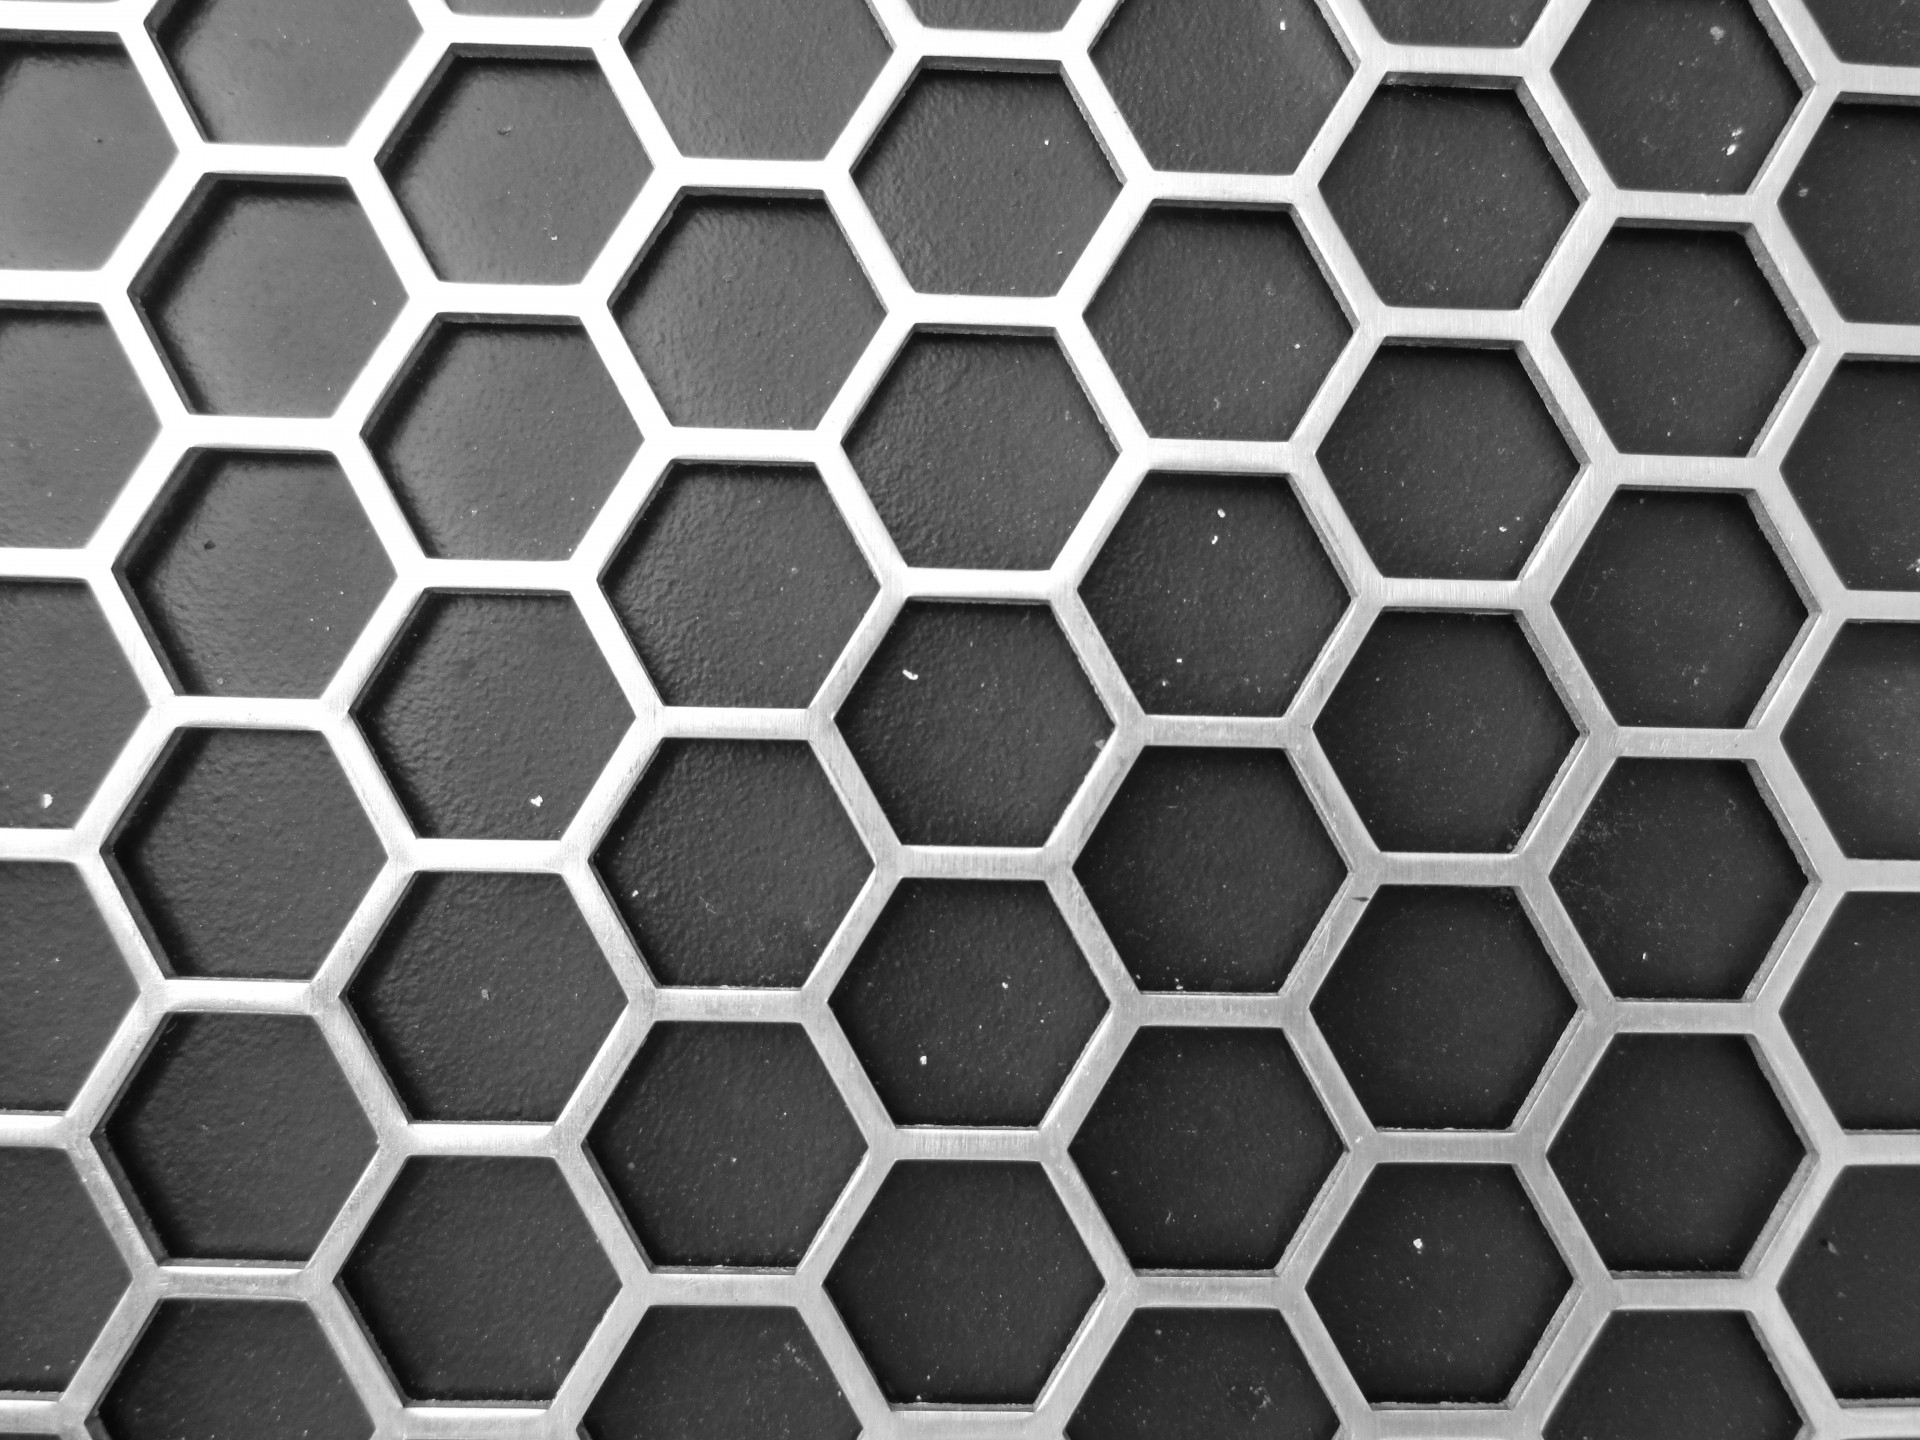 Pattern of a metallic Honeycomb shape